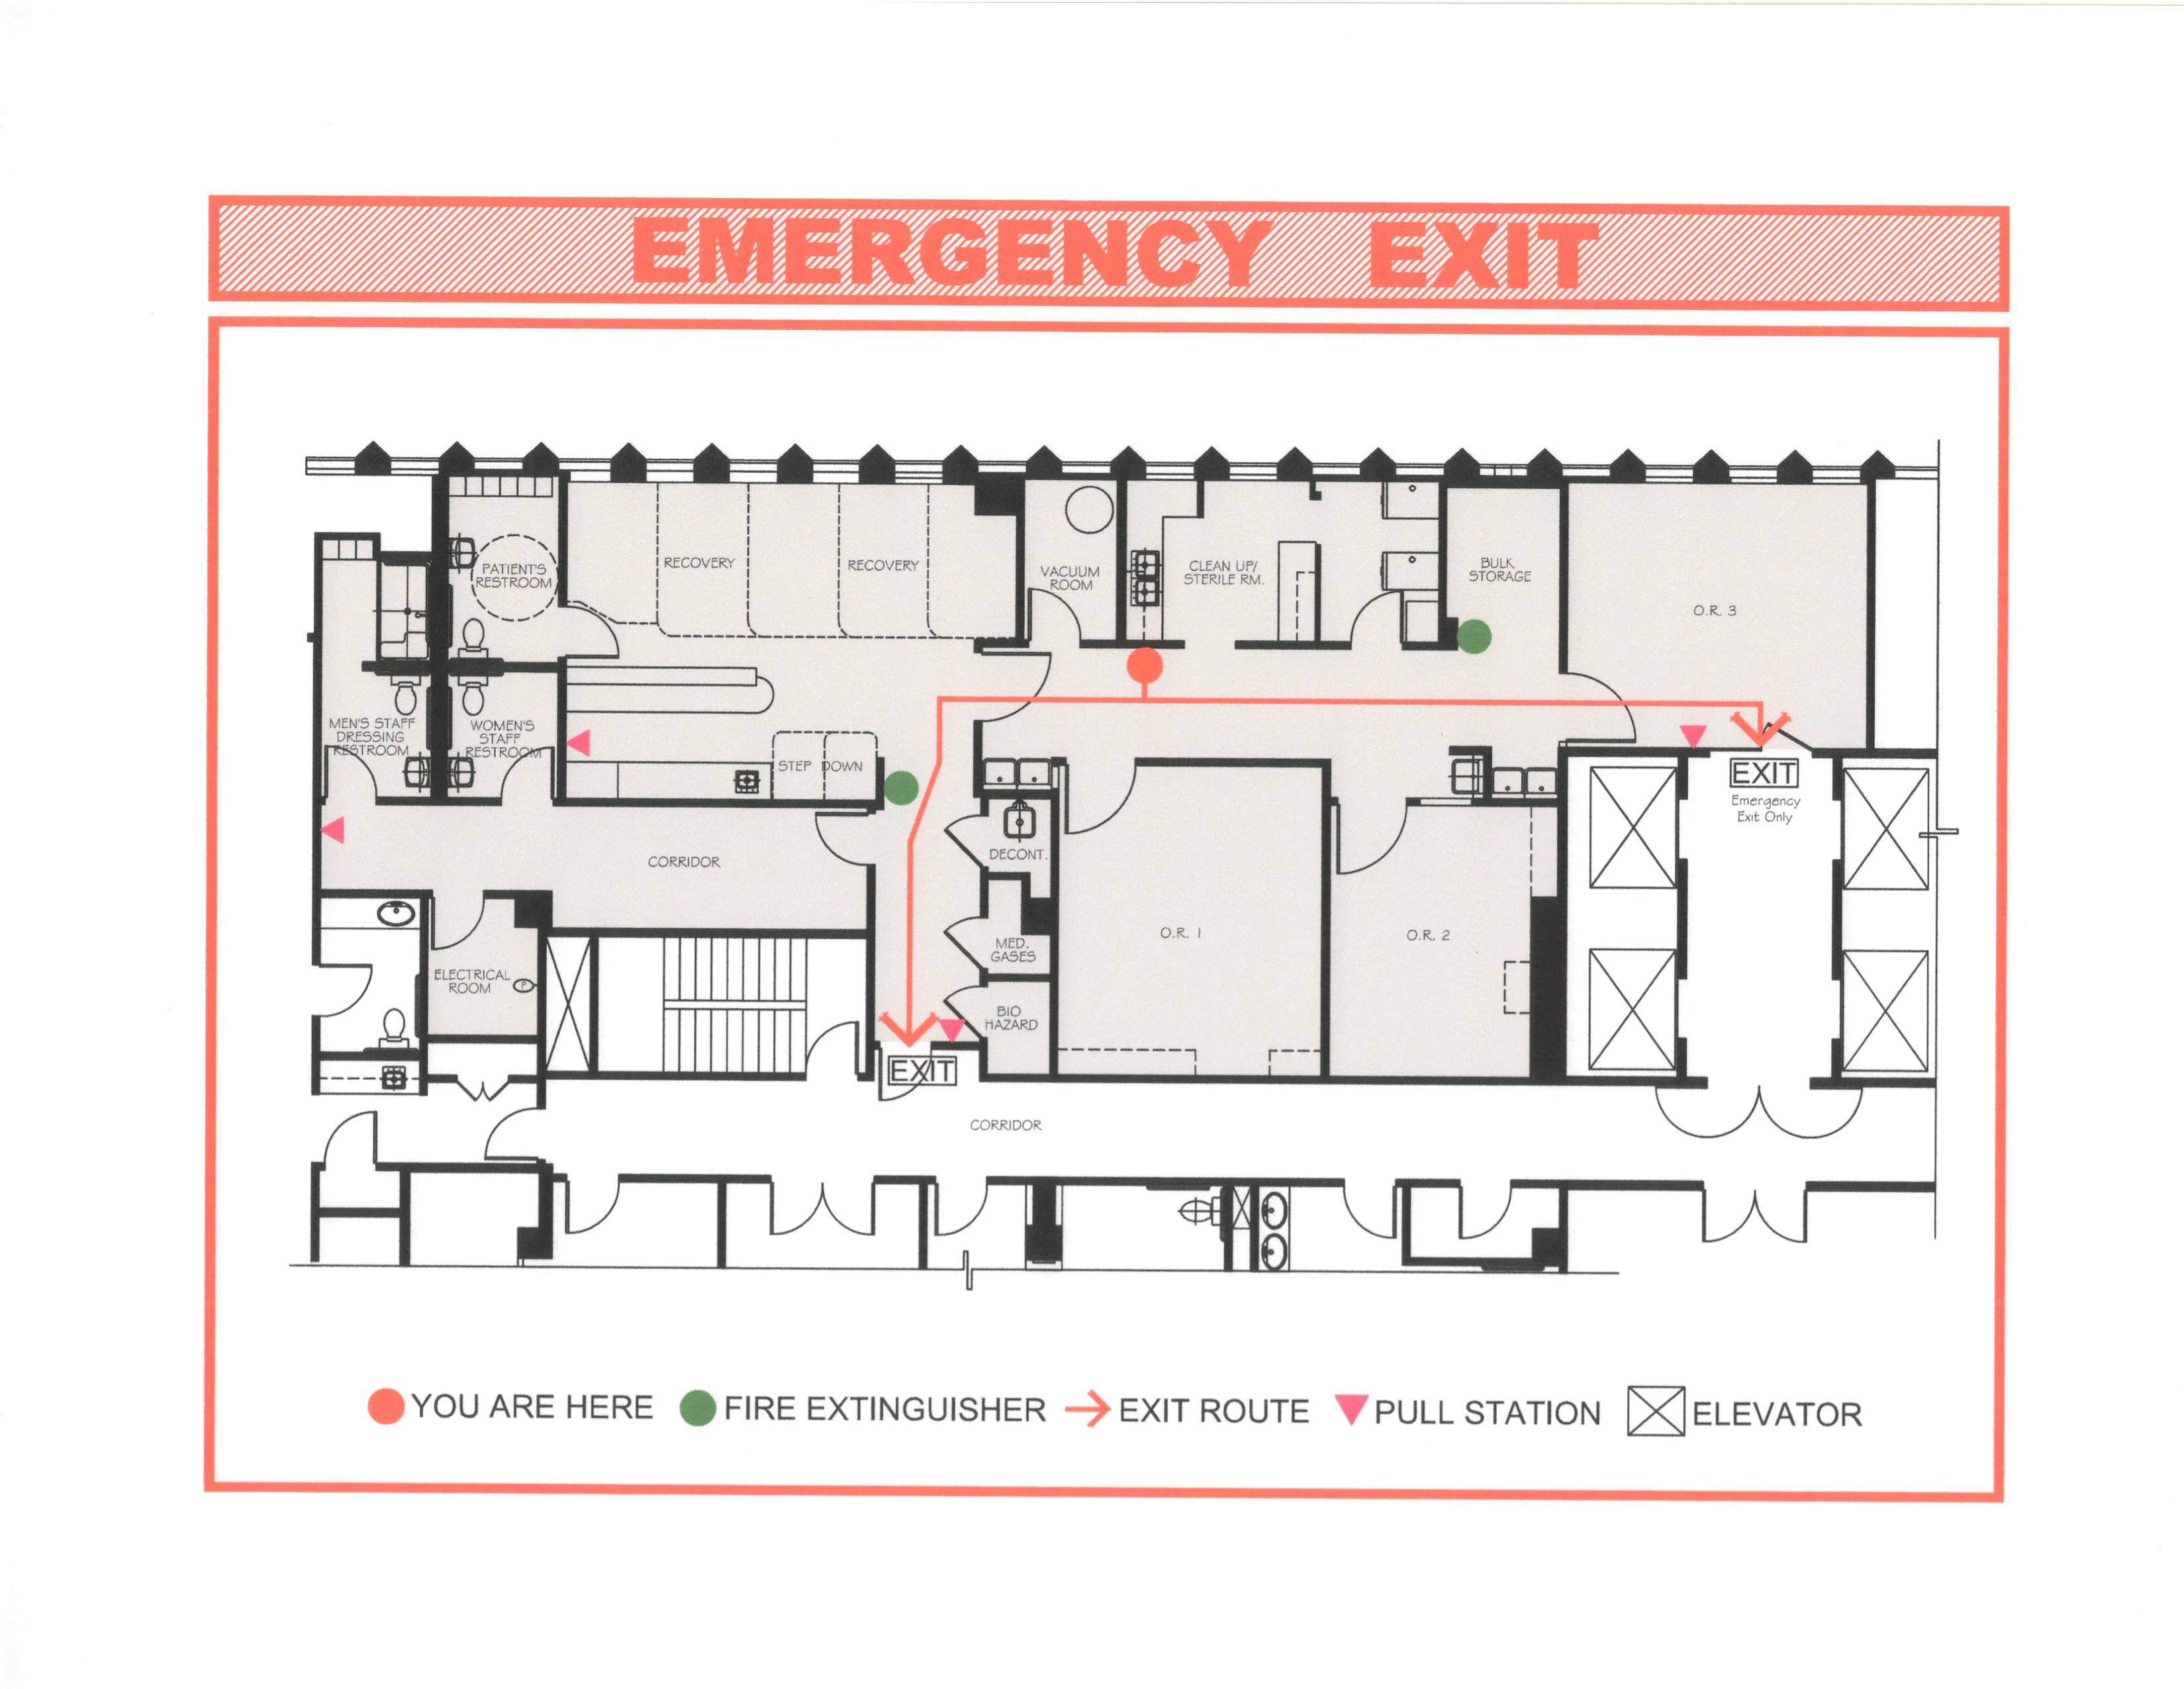 Surgery Center Emergency Evacuation Plan